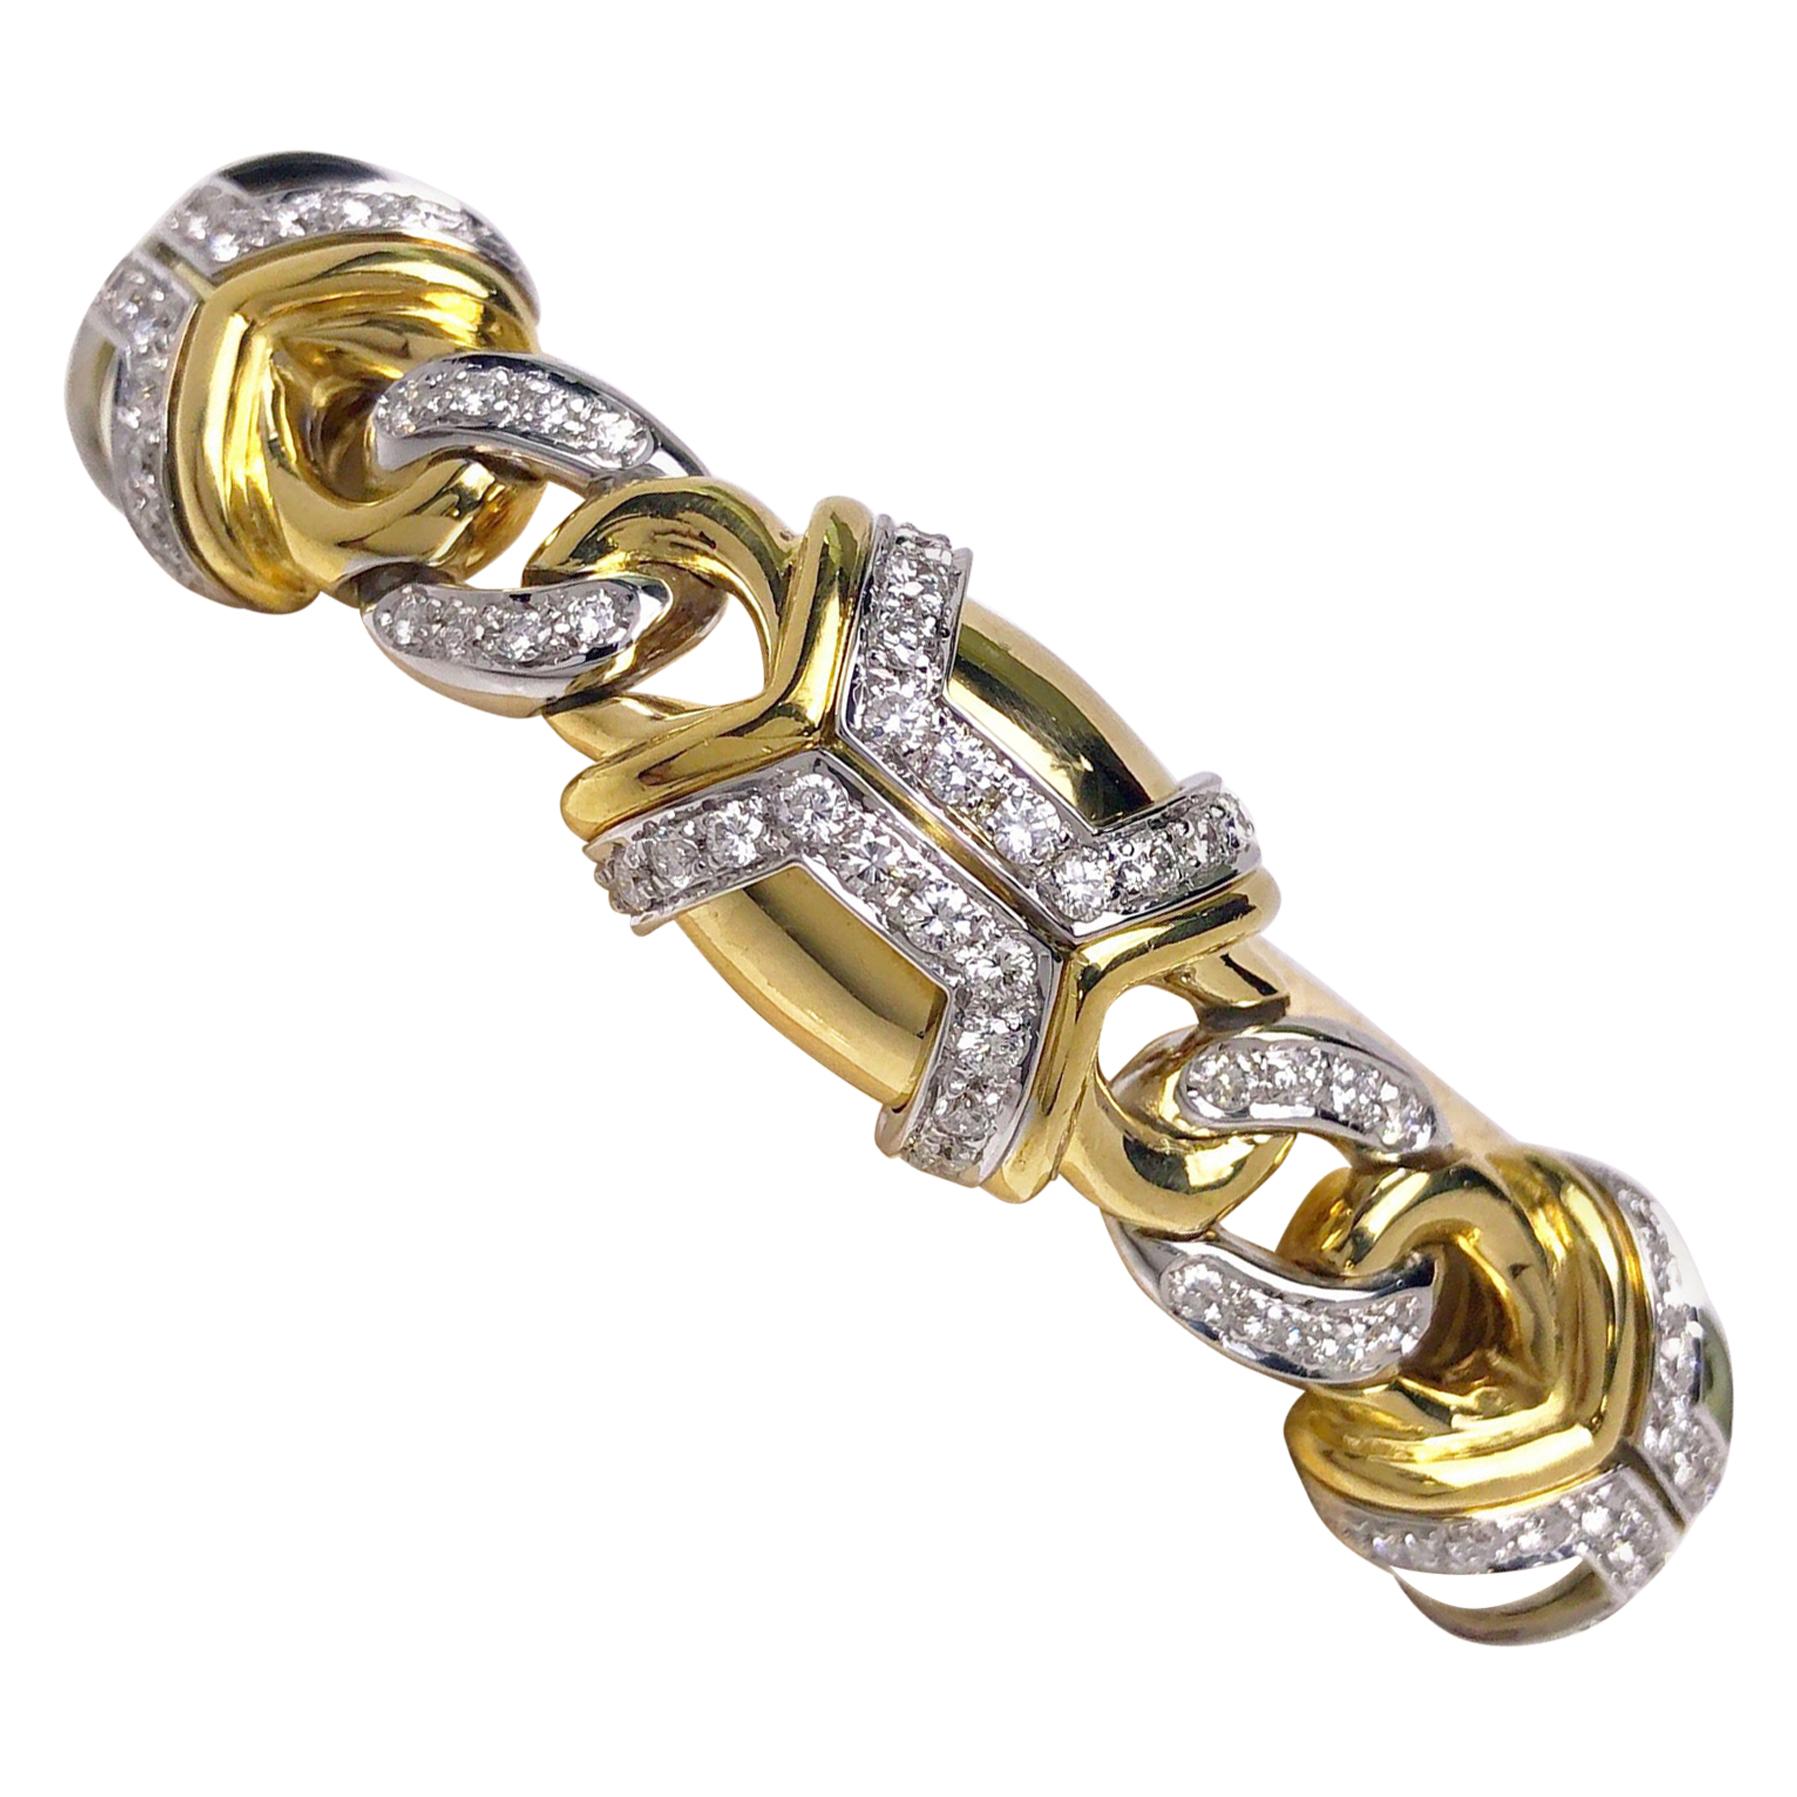 Nino Verita 18 Karat Yellow Gold and 5.03 Carat Diamond Bracelet